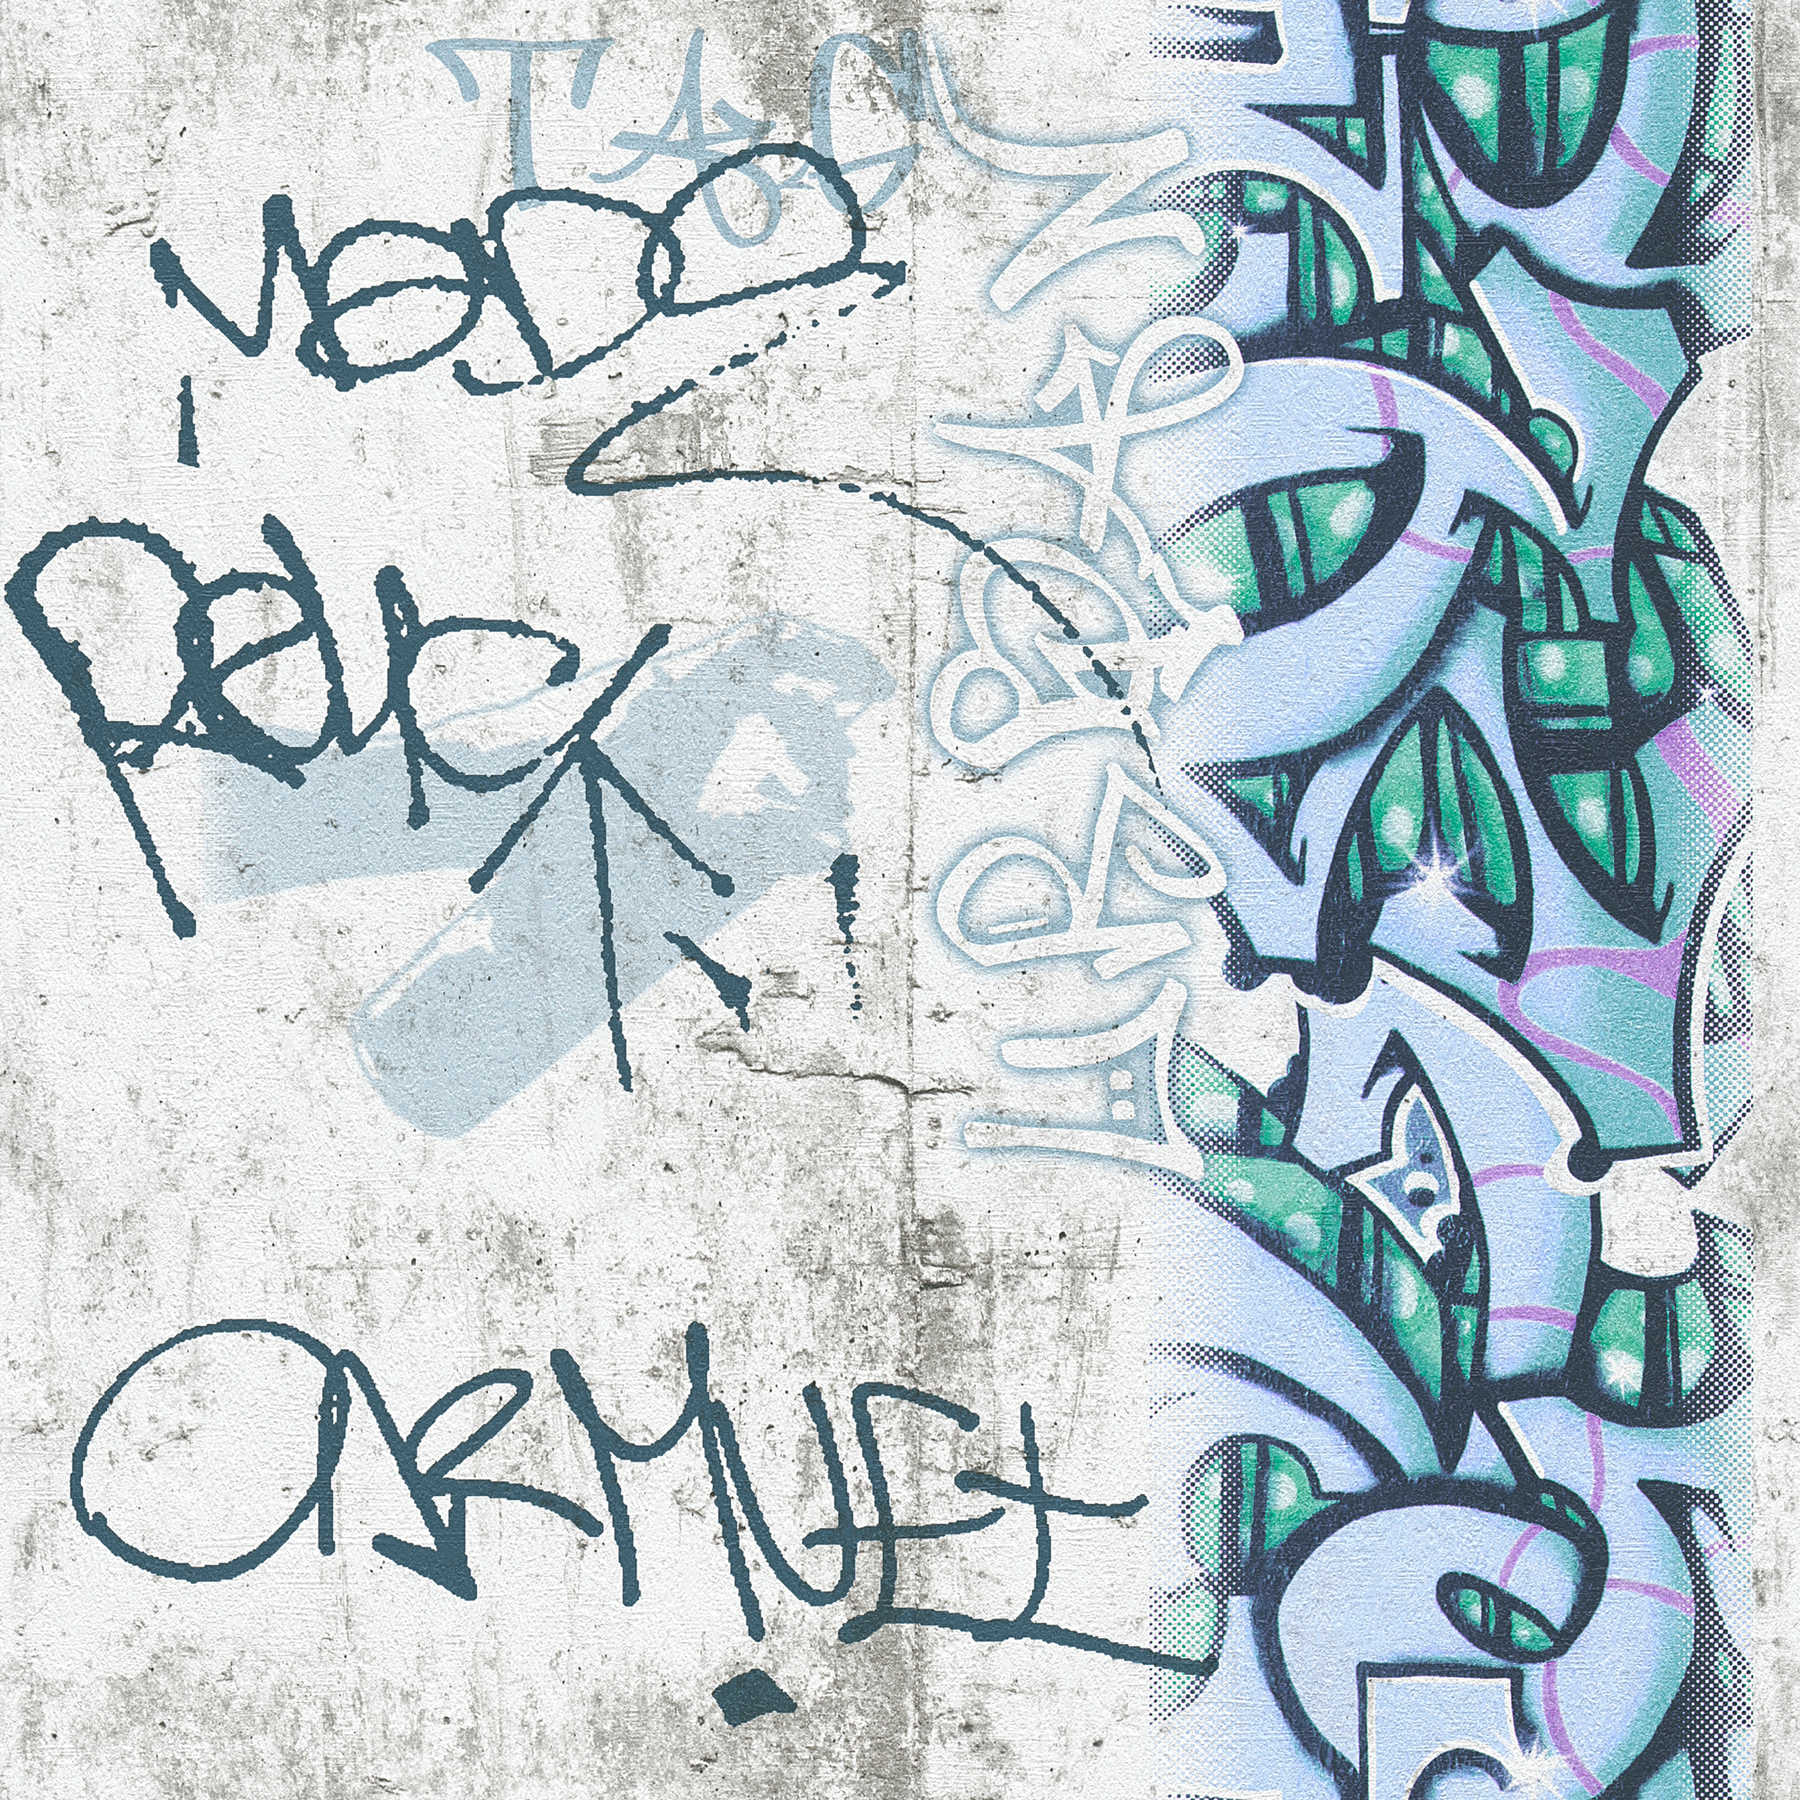 Youth room wallpaper graffiti in street look - grey, green
